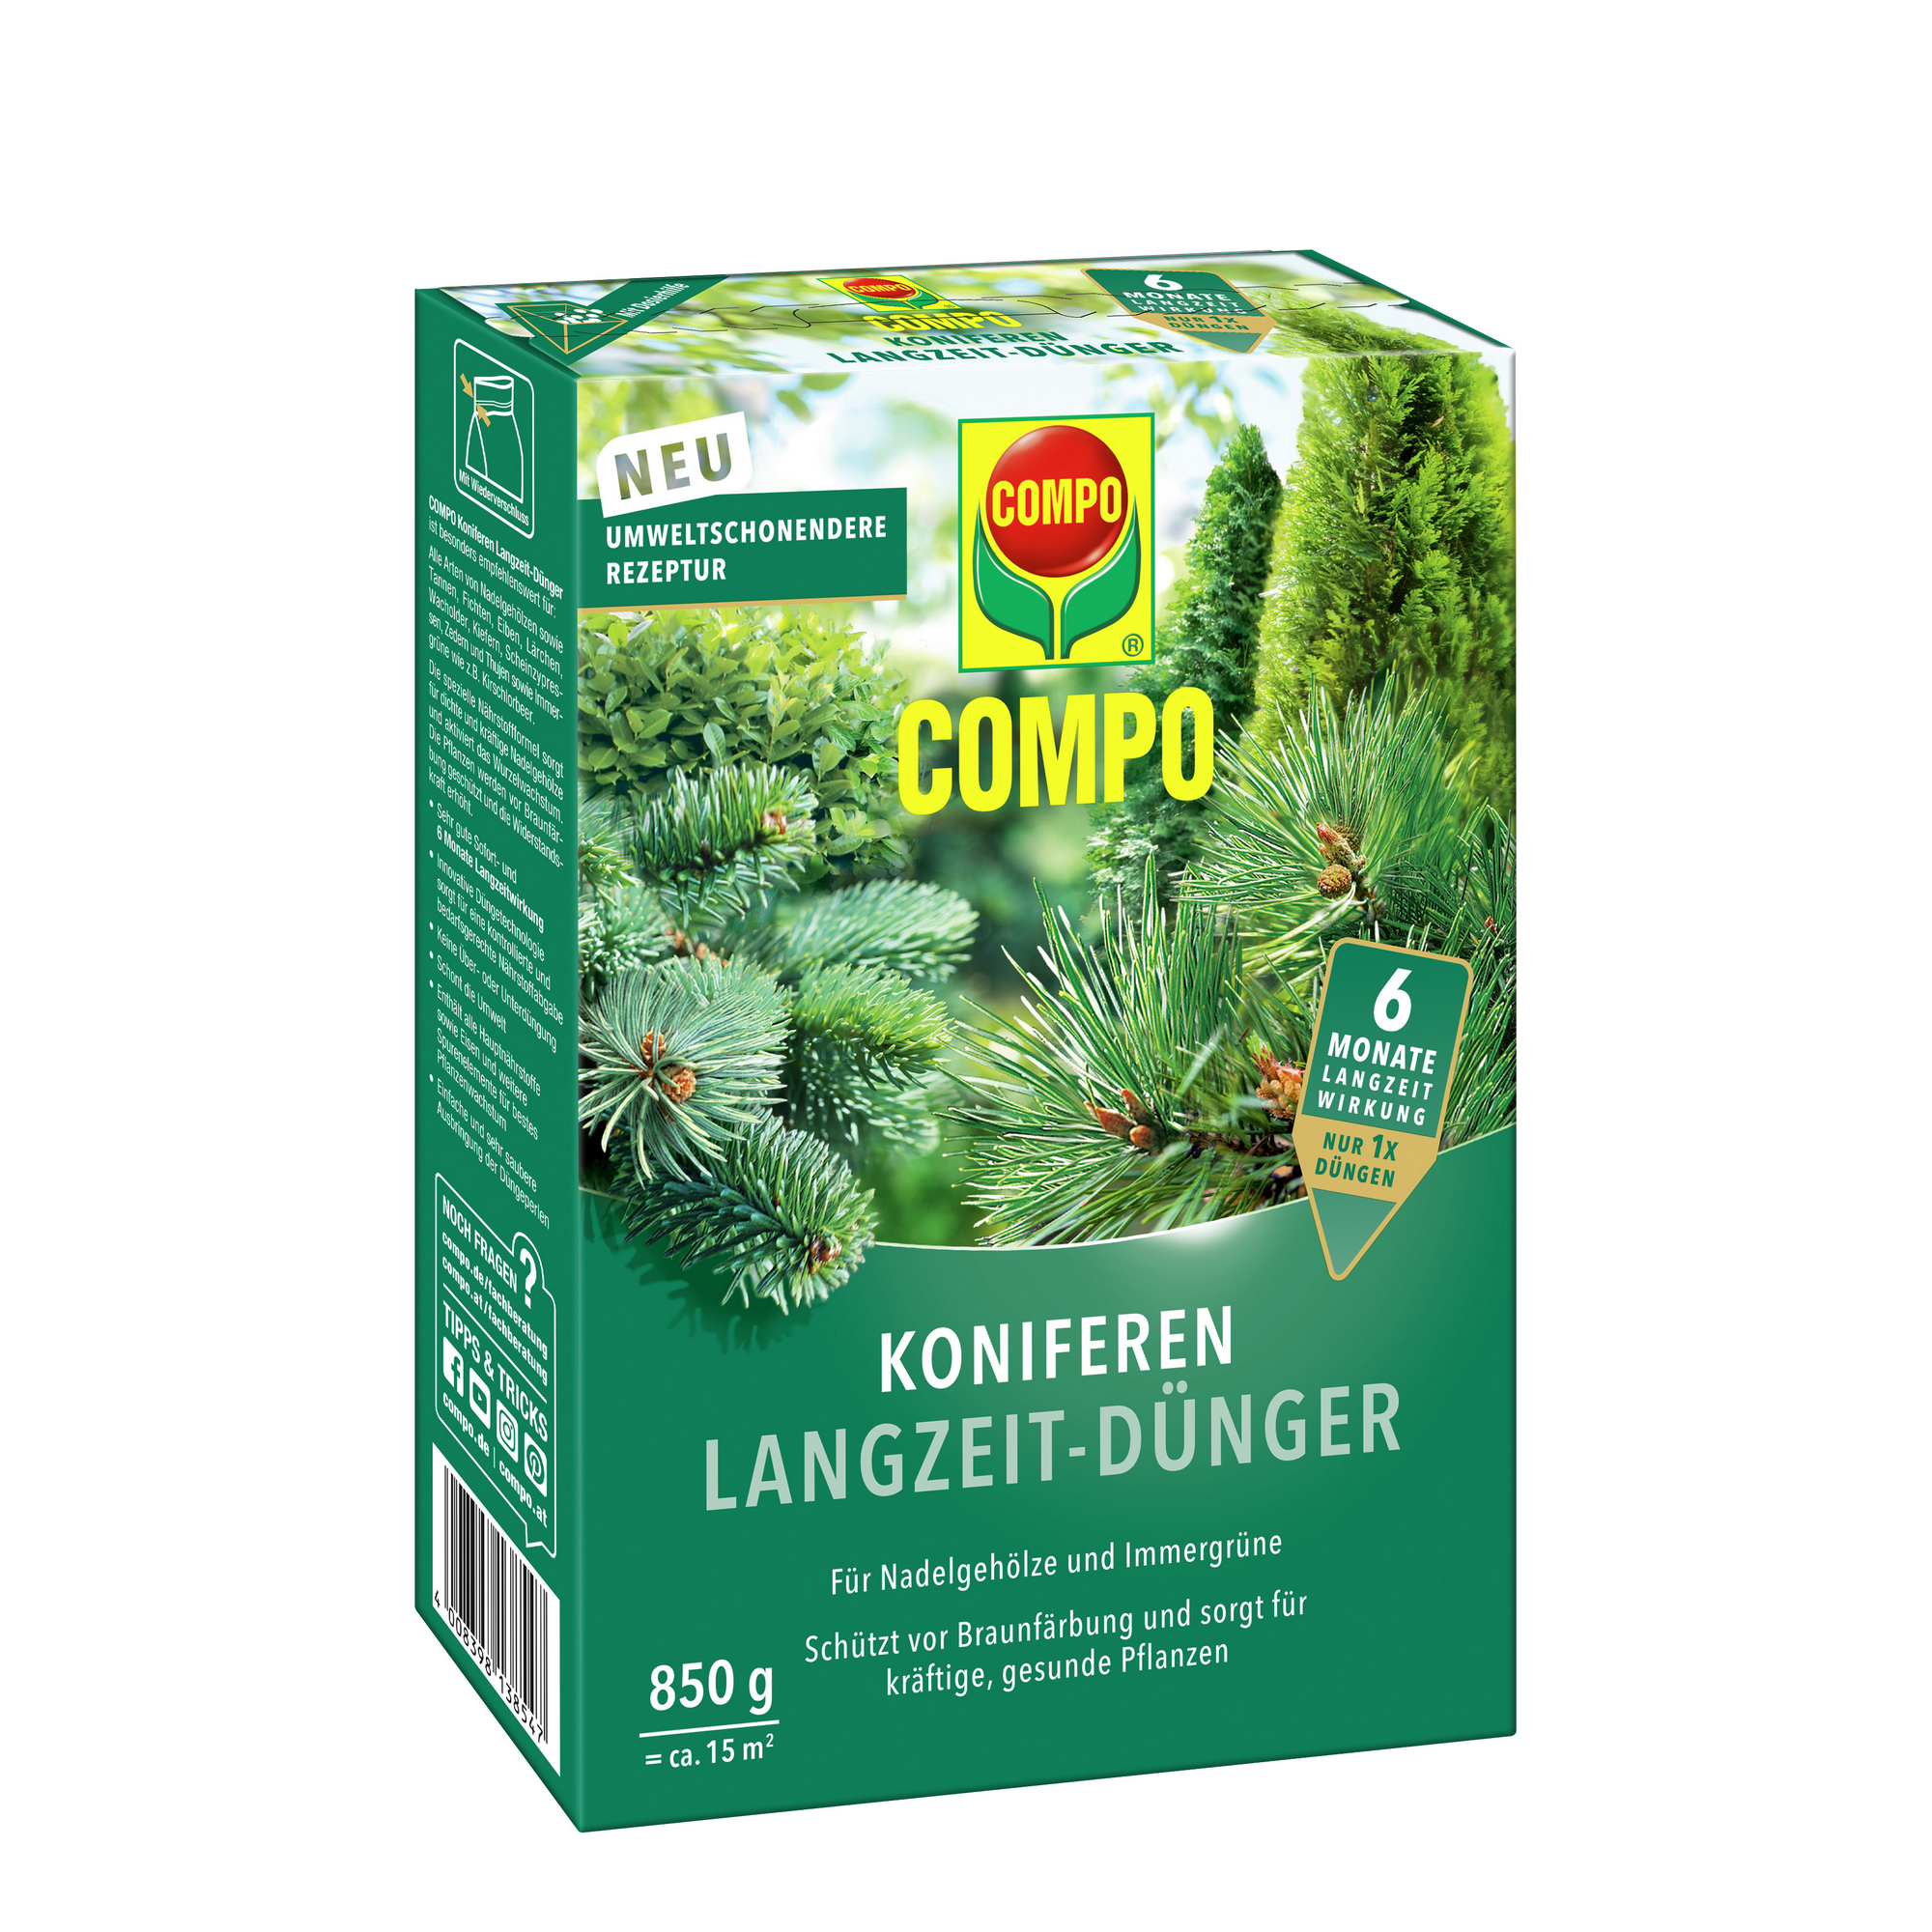 Koniferen-Langzeitdünger 850 g + product picture